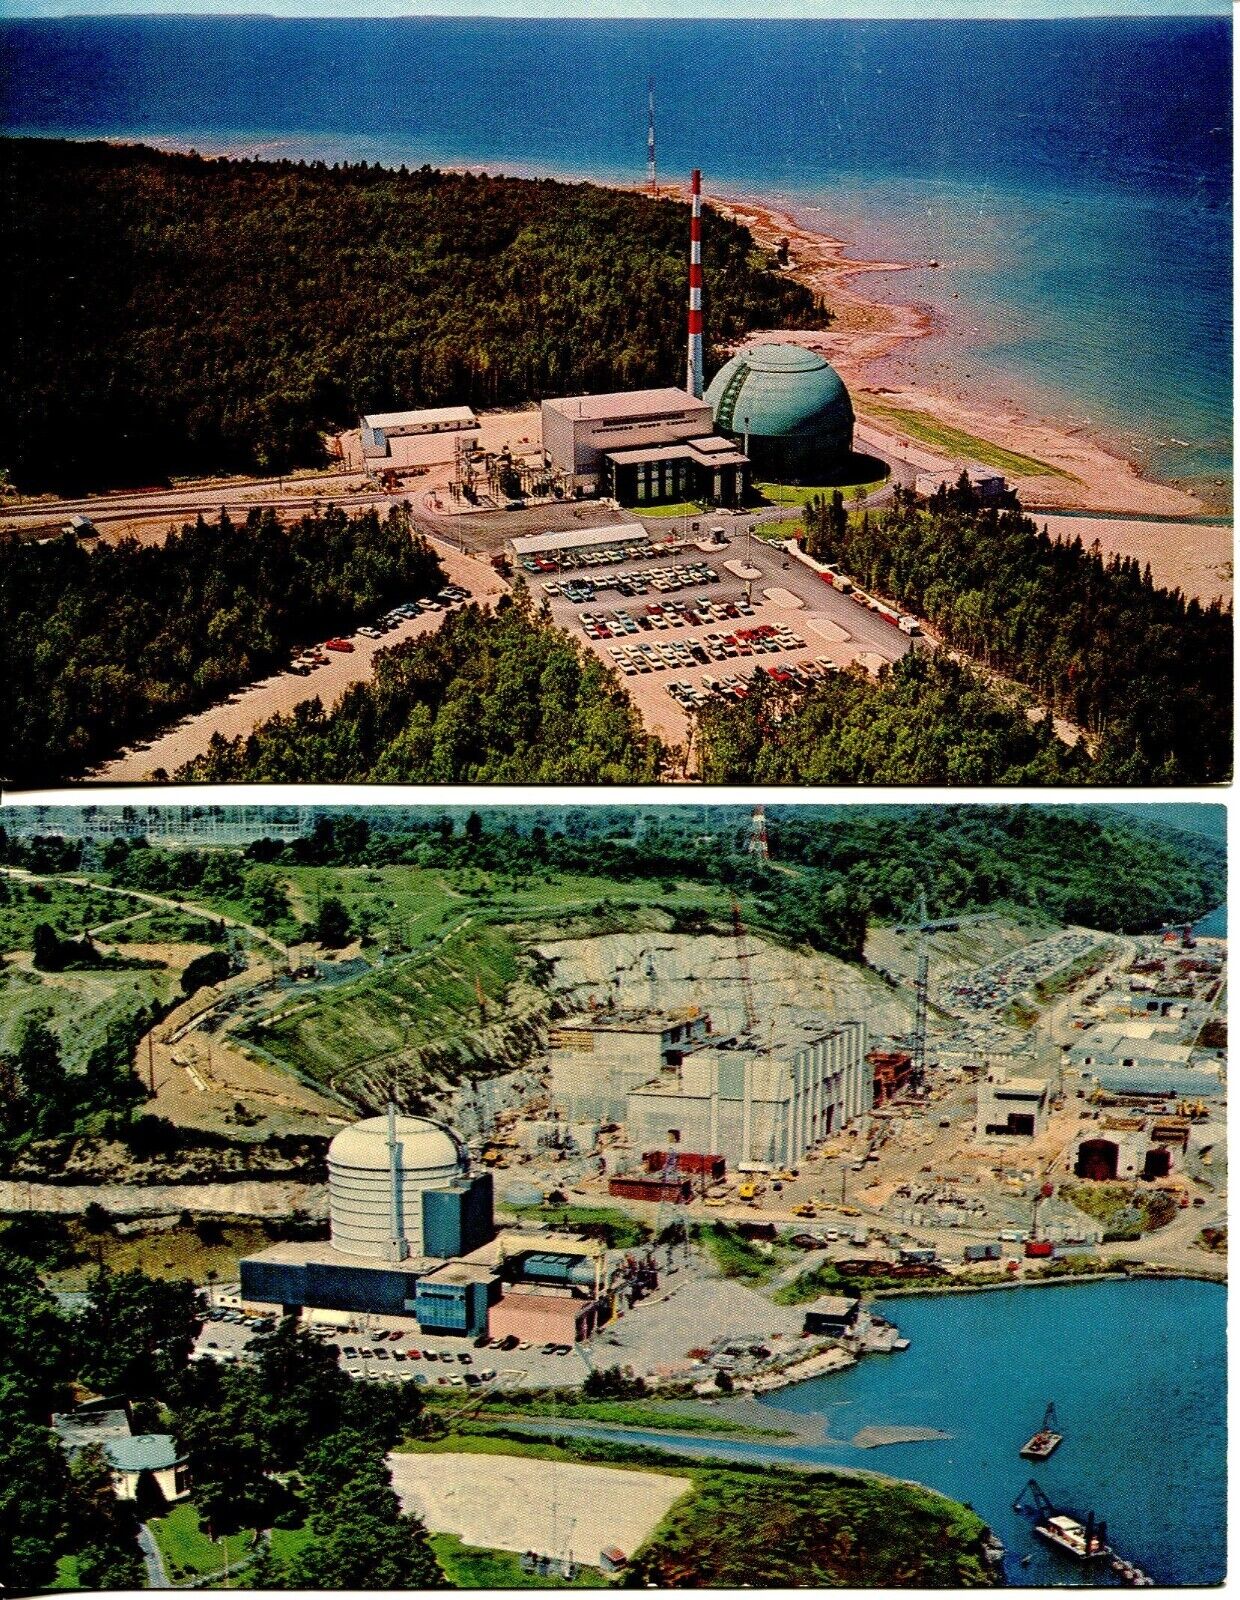 Lot of 2 - Atomic Power Plant Postcards - Big Rock Point & Peach Bottom - VG/EX